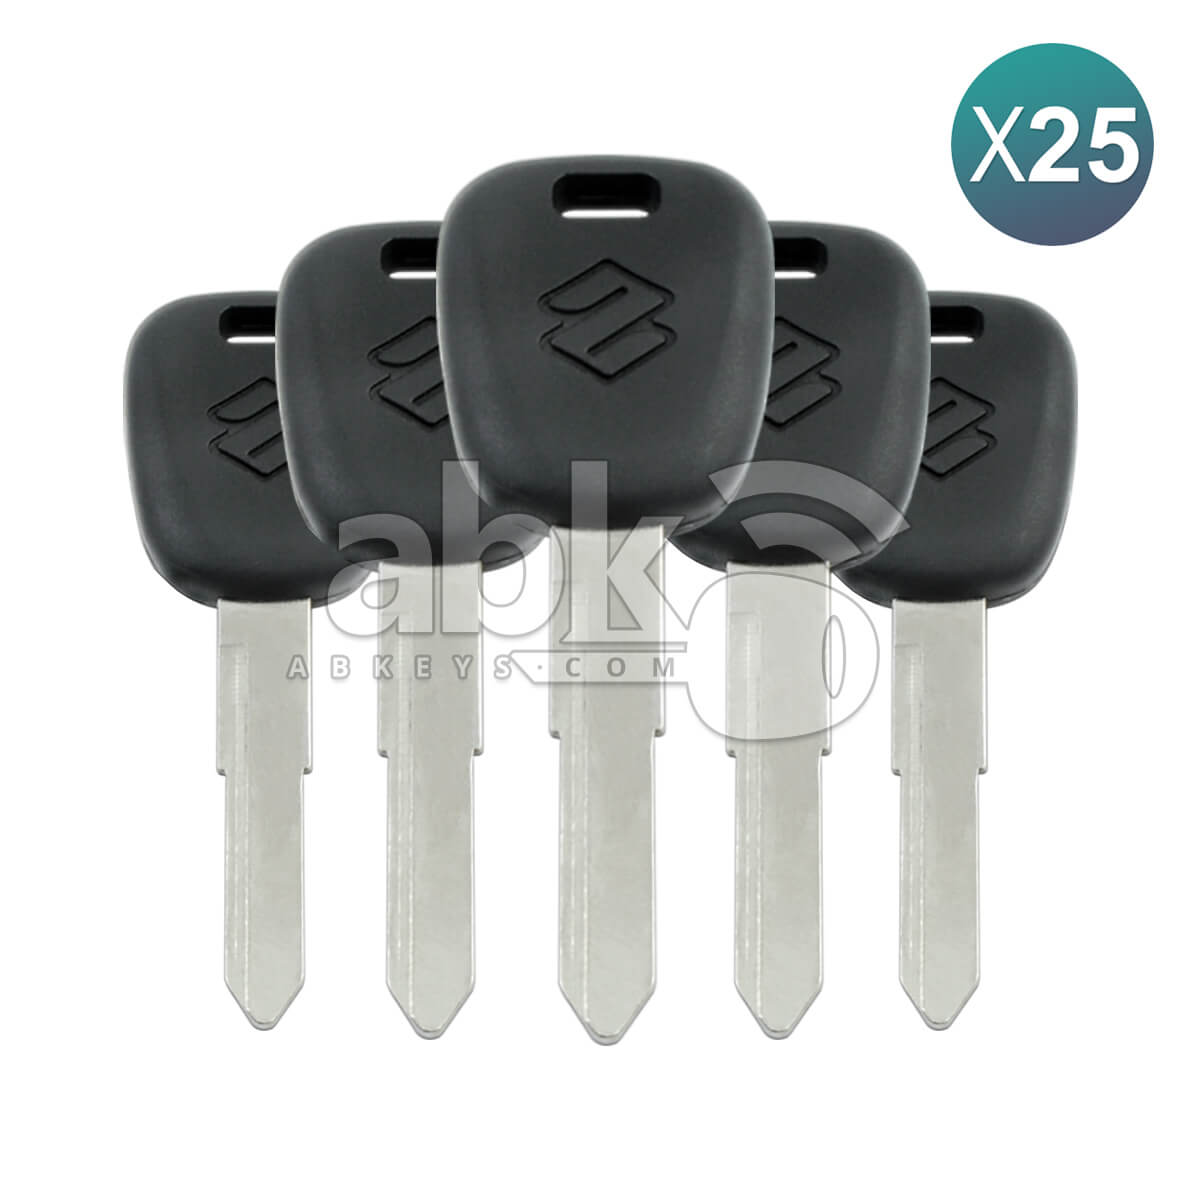 Suzuki Chip Less Key HU133 25Pcs Bundle - ABK-869-OFF25 - ABKEYS.COM